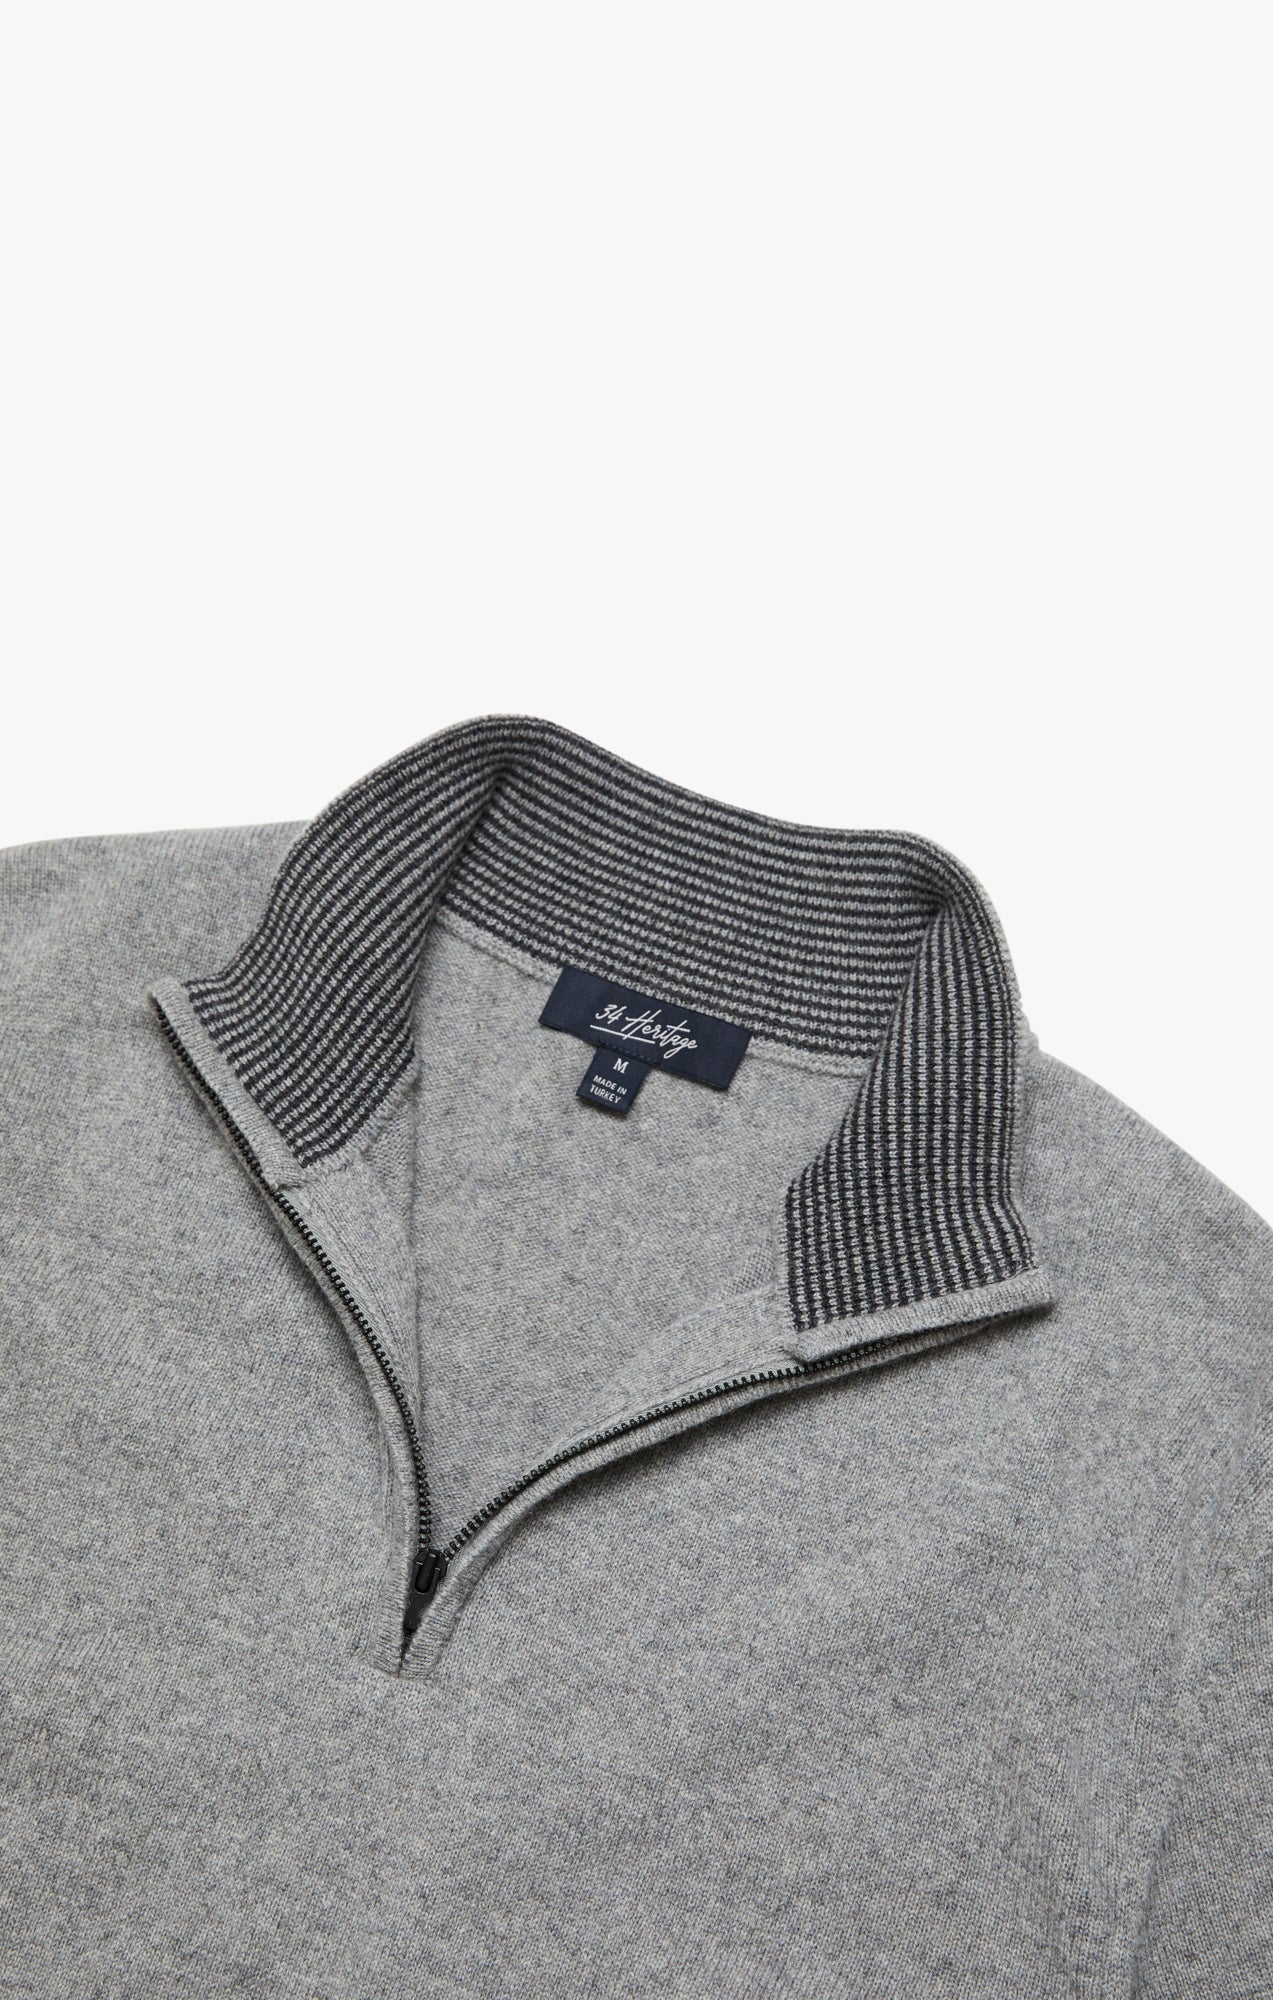 Cashmere Quarter Zip Sweater In Grey Melange Image 10